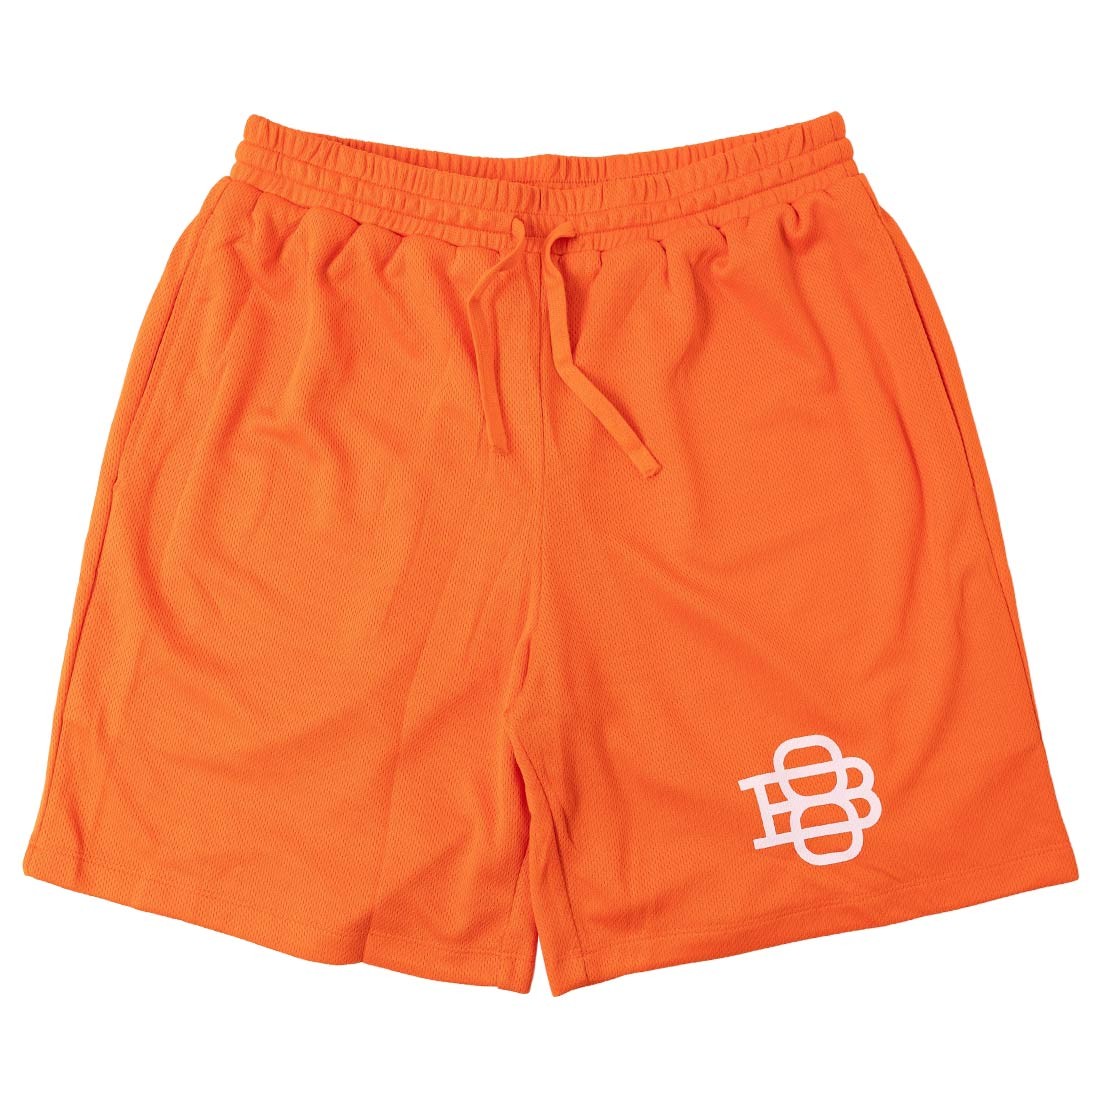 Baseline Printed Basketball Shorts Men, Orange, Puma